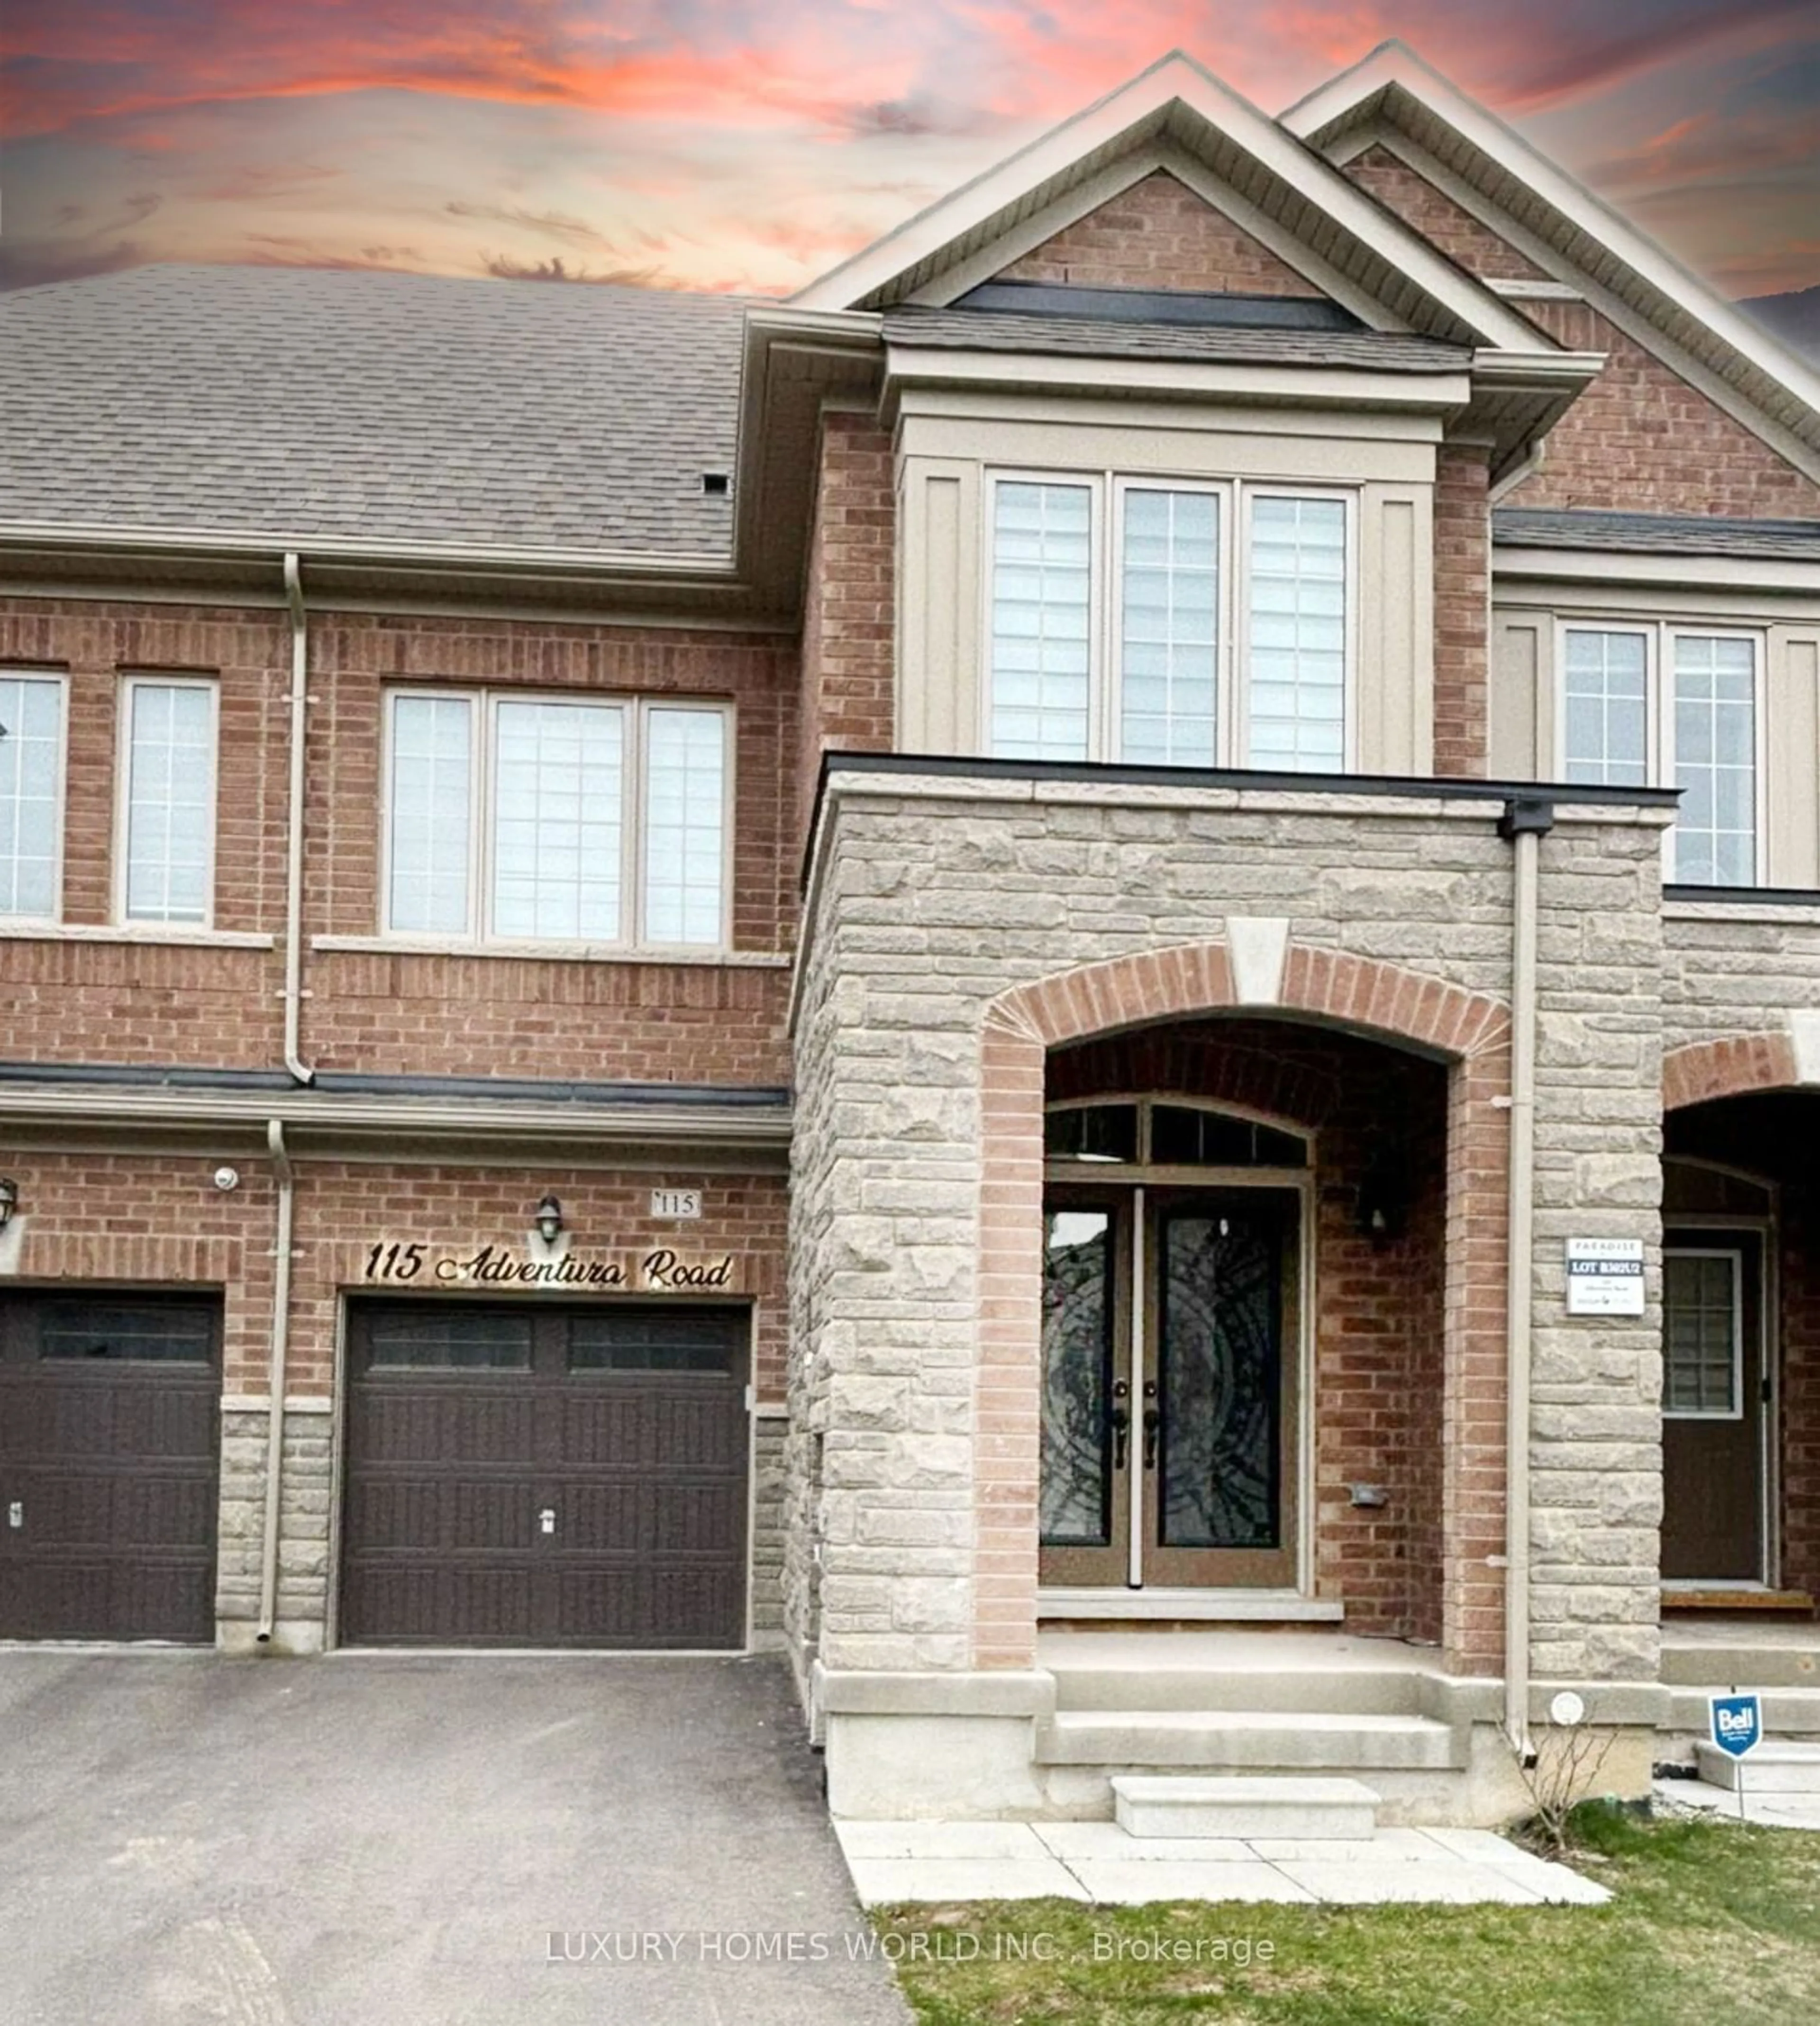 Home with brick exterior material for 115 Adventura Rd, Brampton Ontario L7A 5A7